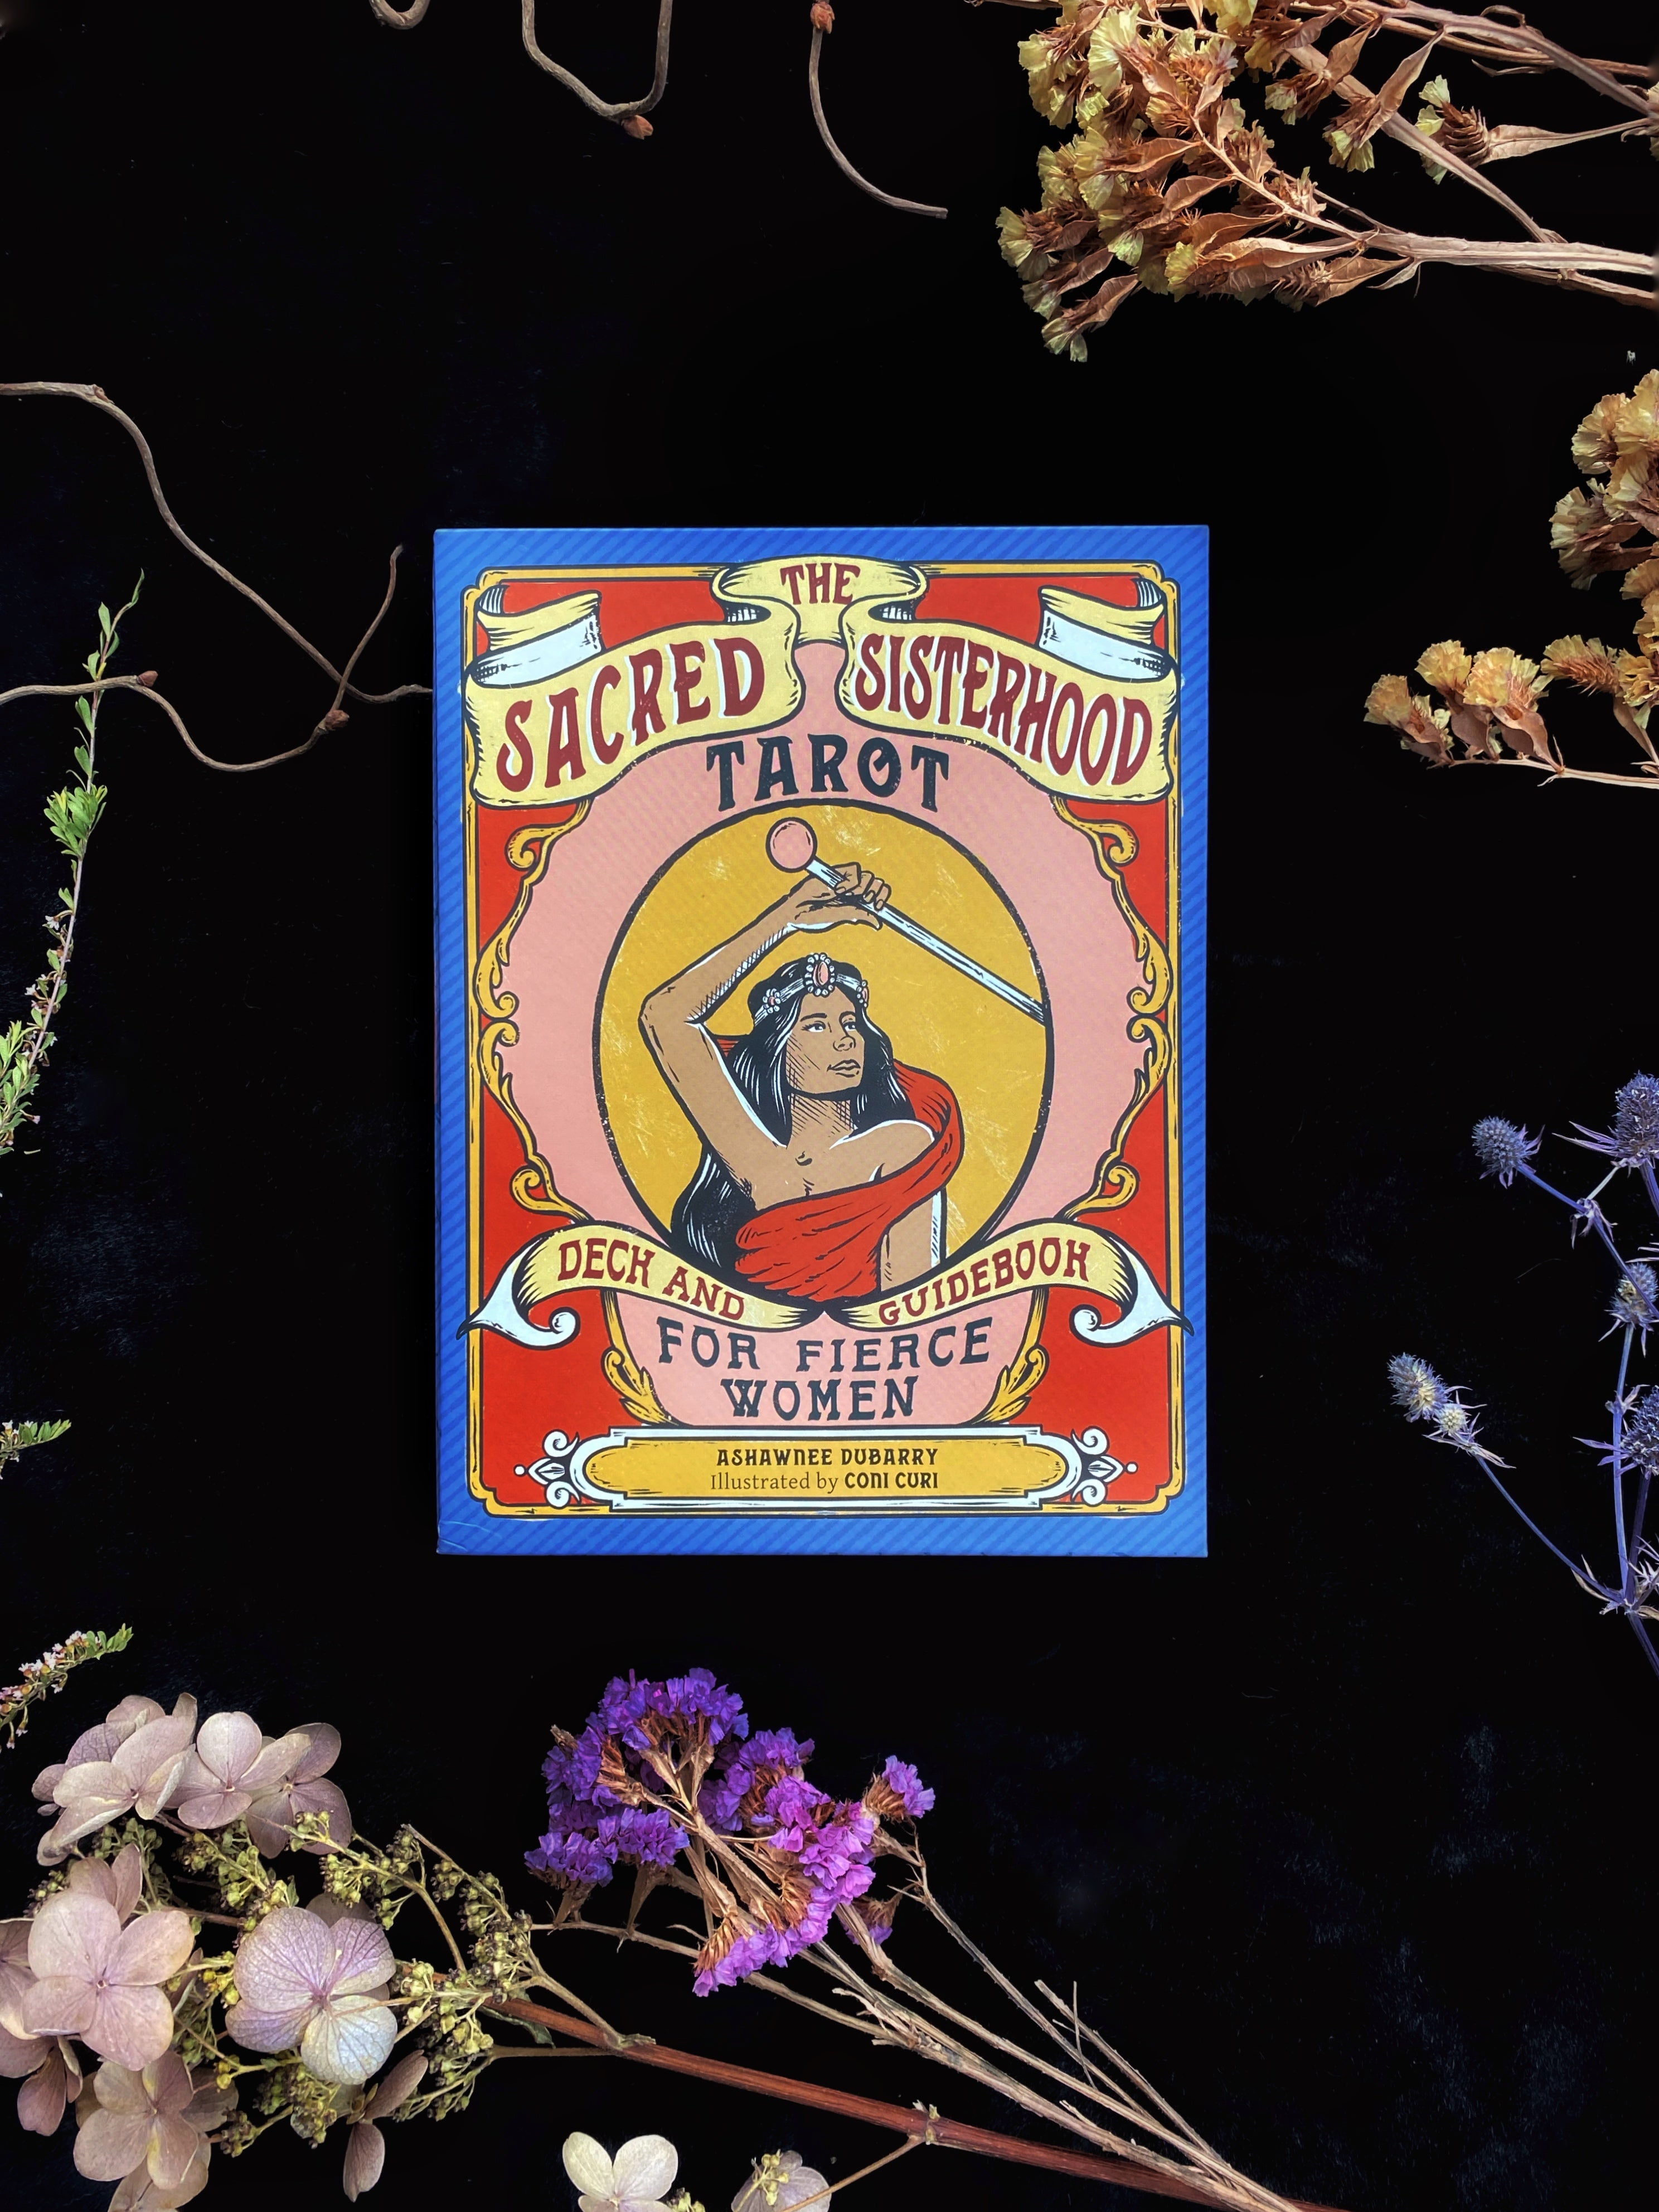 The Sacred Sisterhood Tarot: Deck and Guidebook for Fierce Women